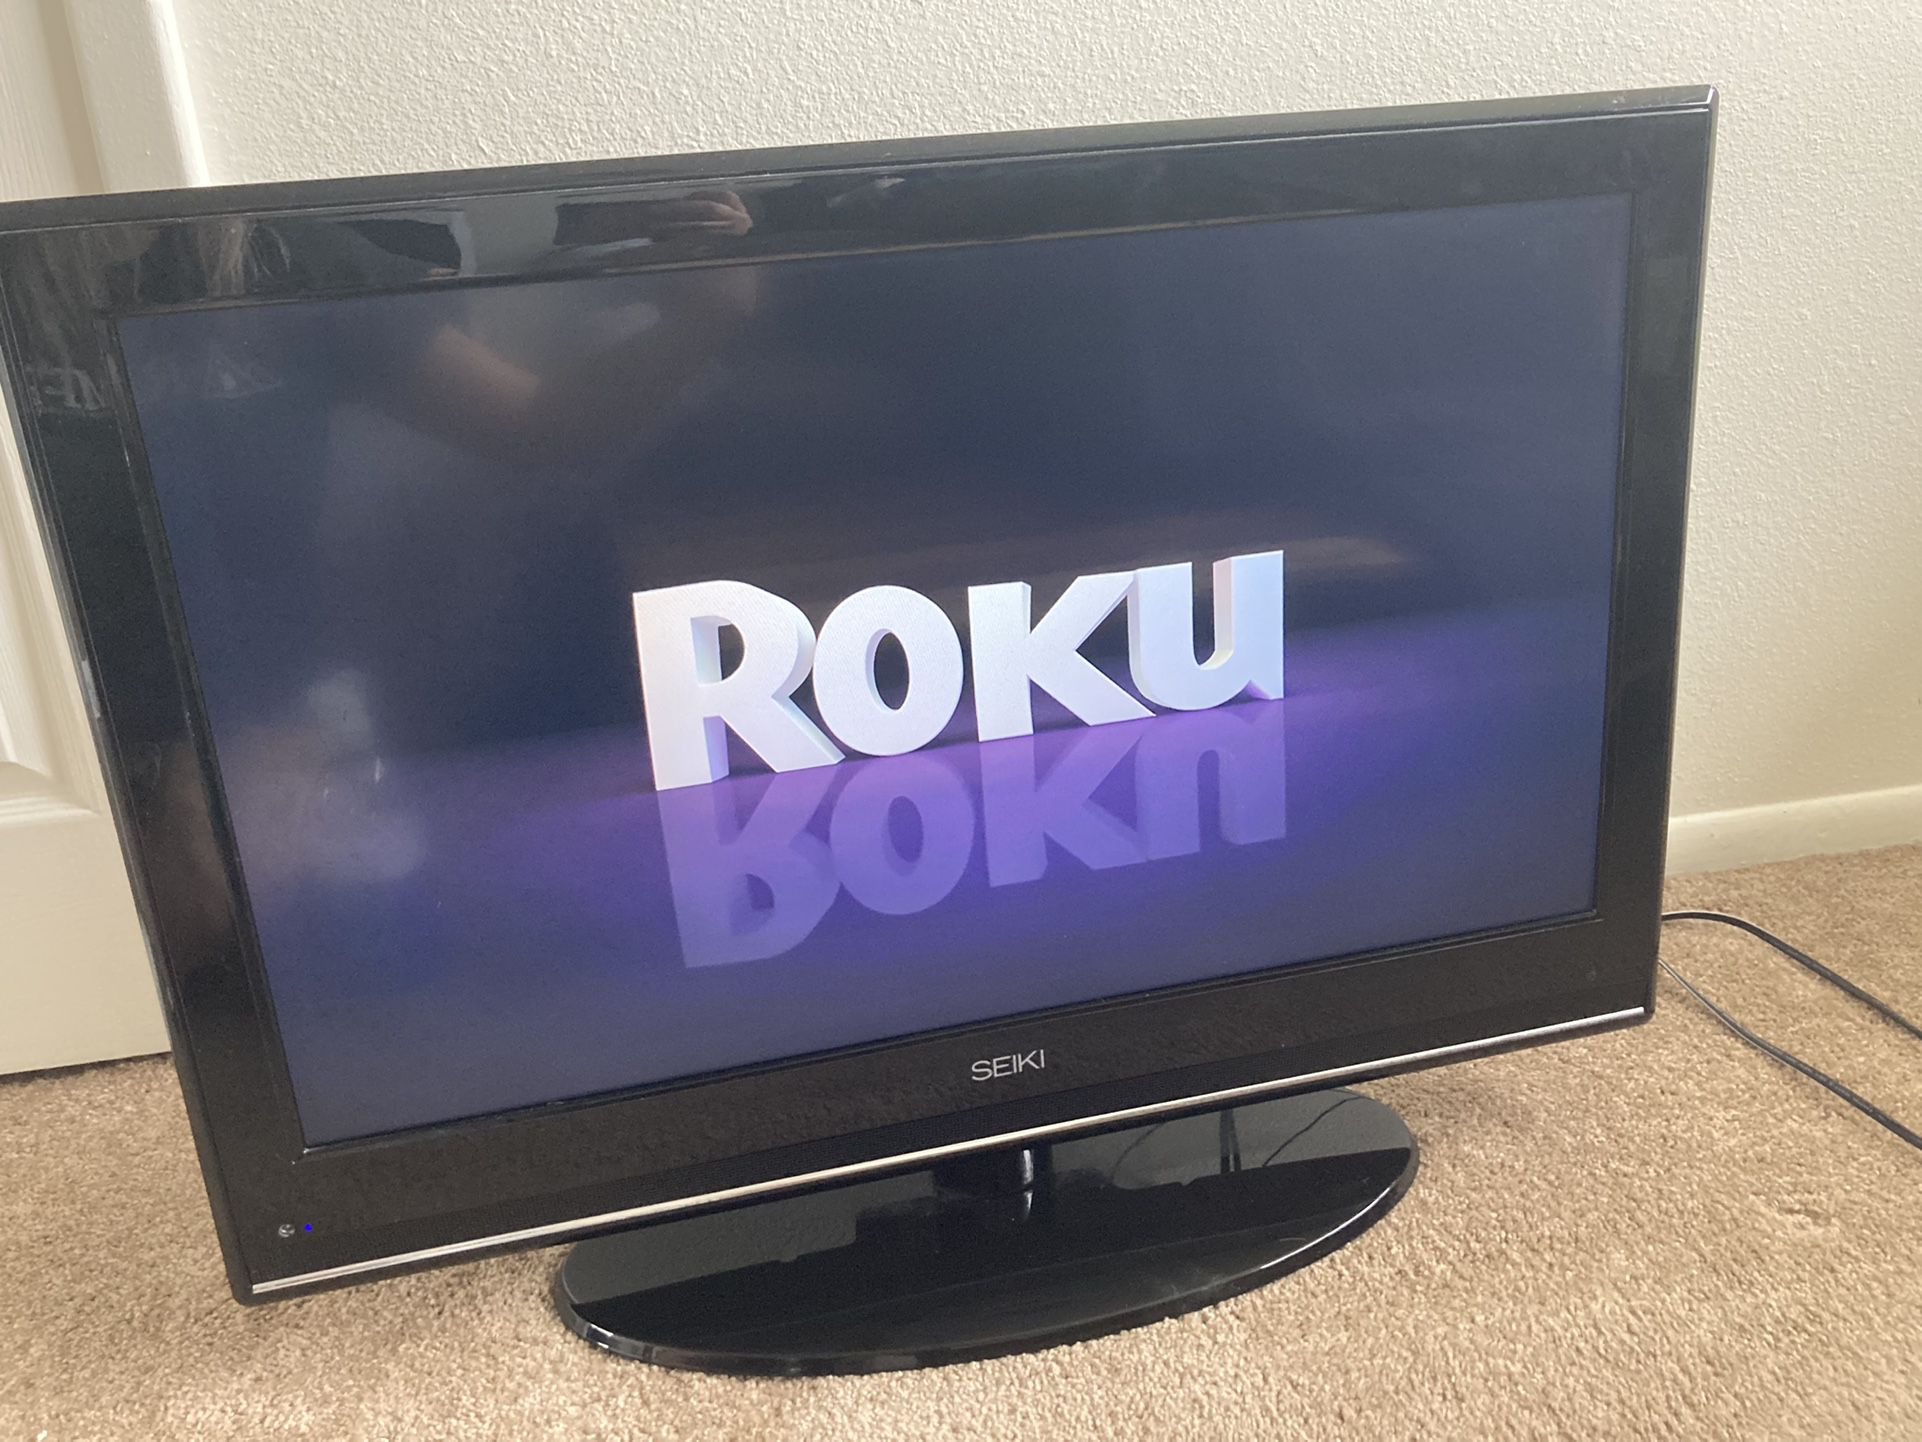 Seiki TV LC-32G82 32-Inch 1080p 60Hz LCD HD TV (Black) AND ROKU STICK.  